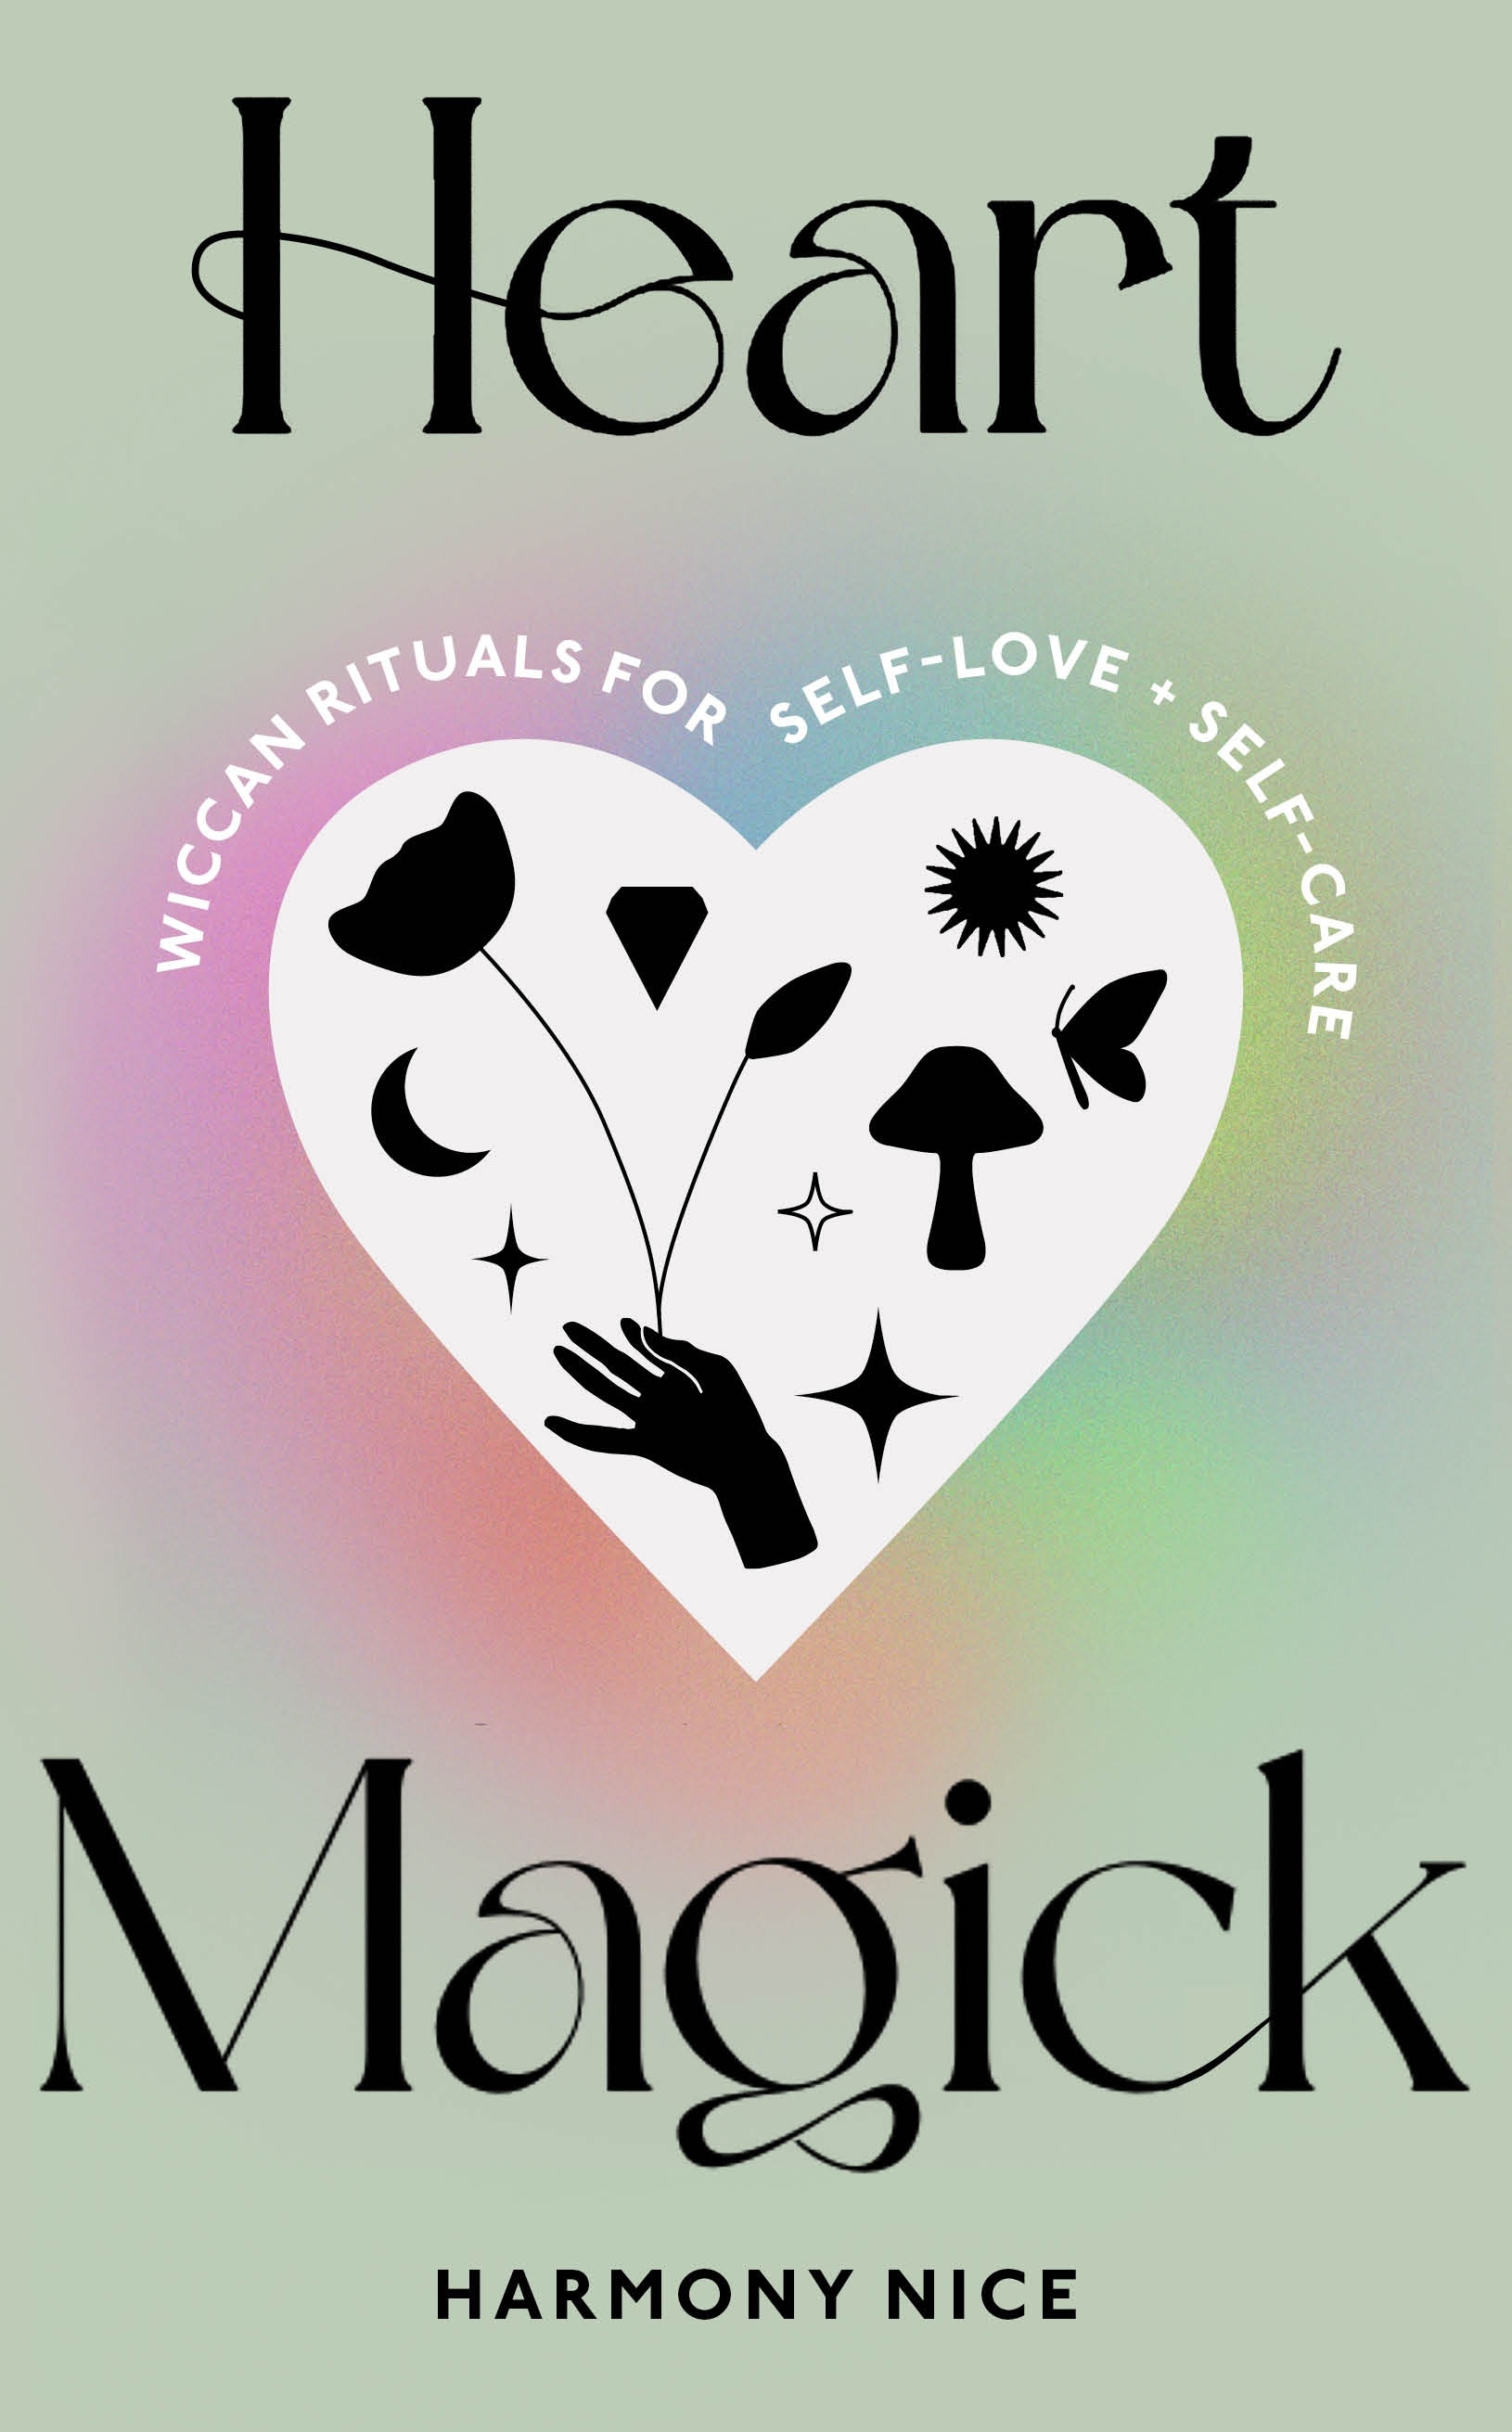 Heart Magick